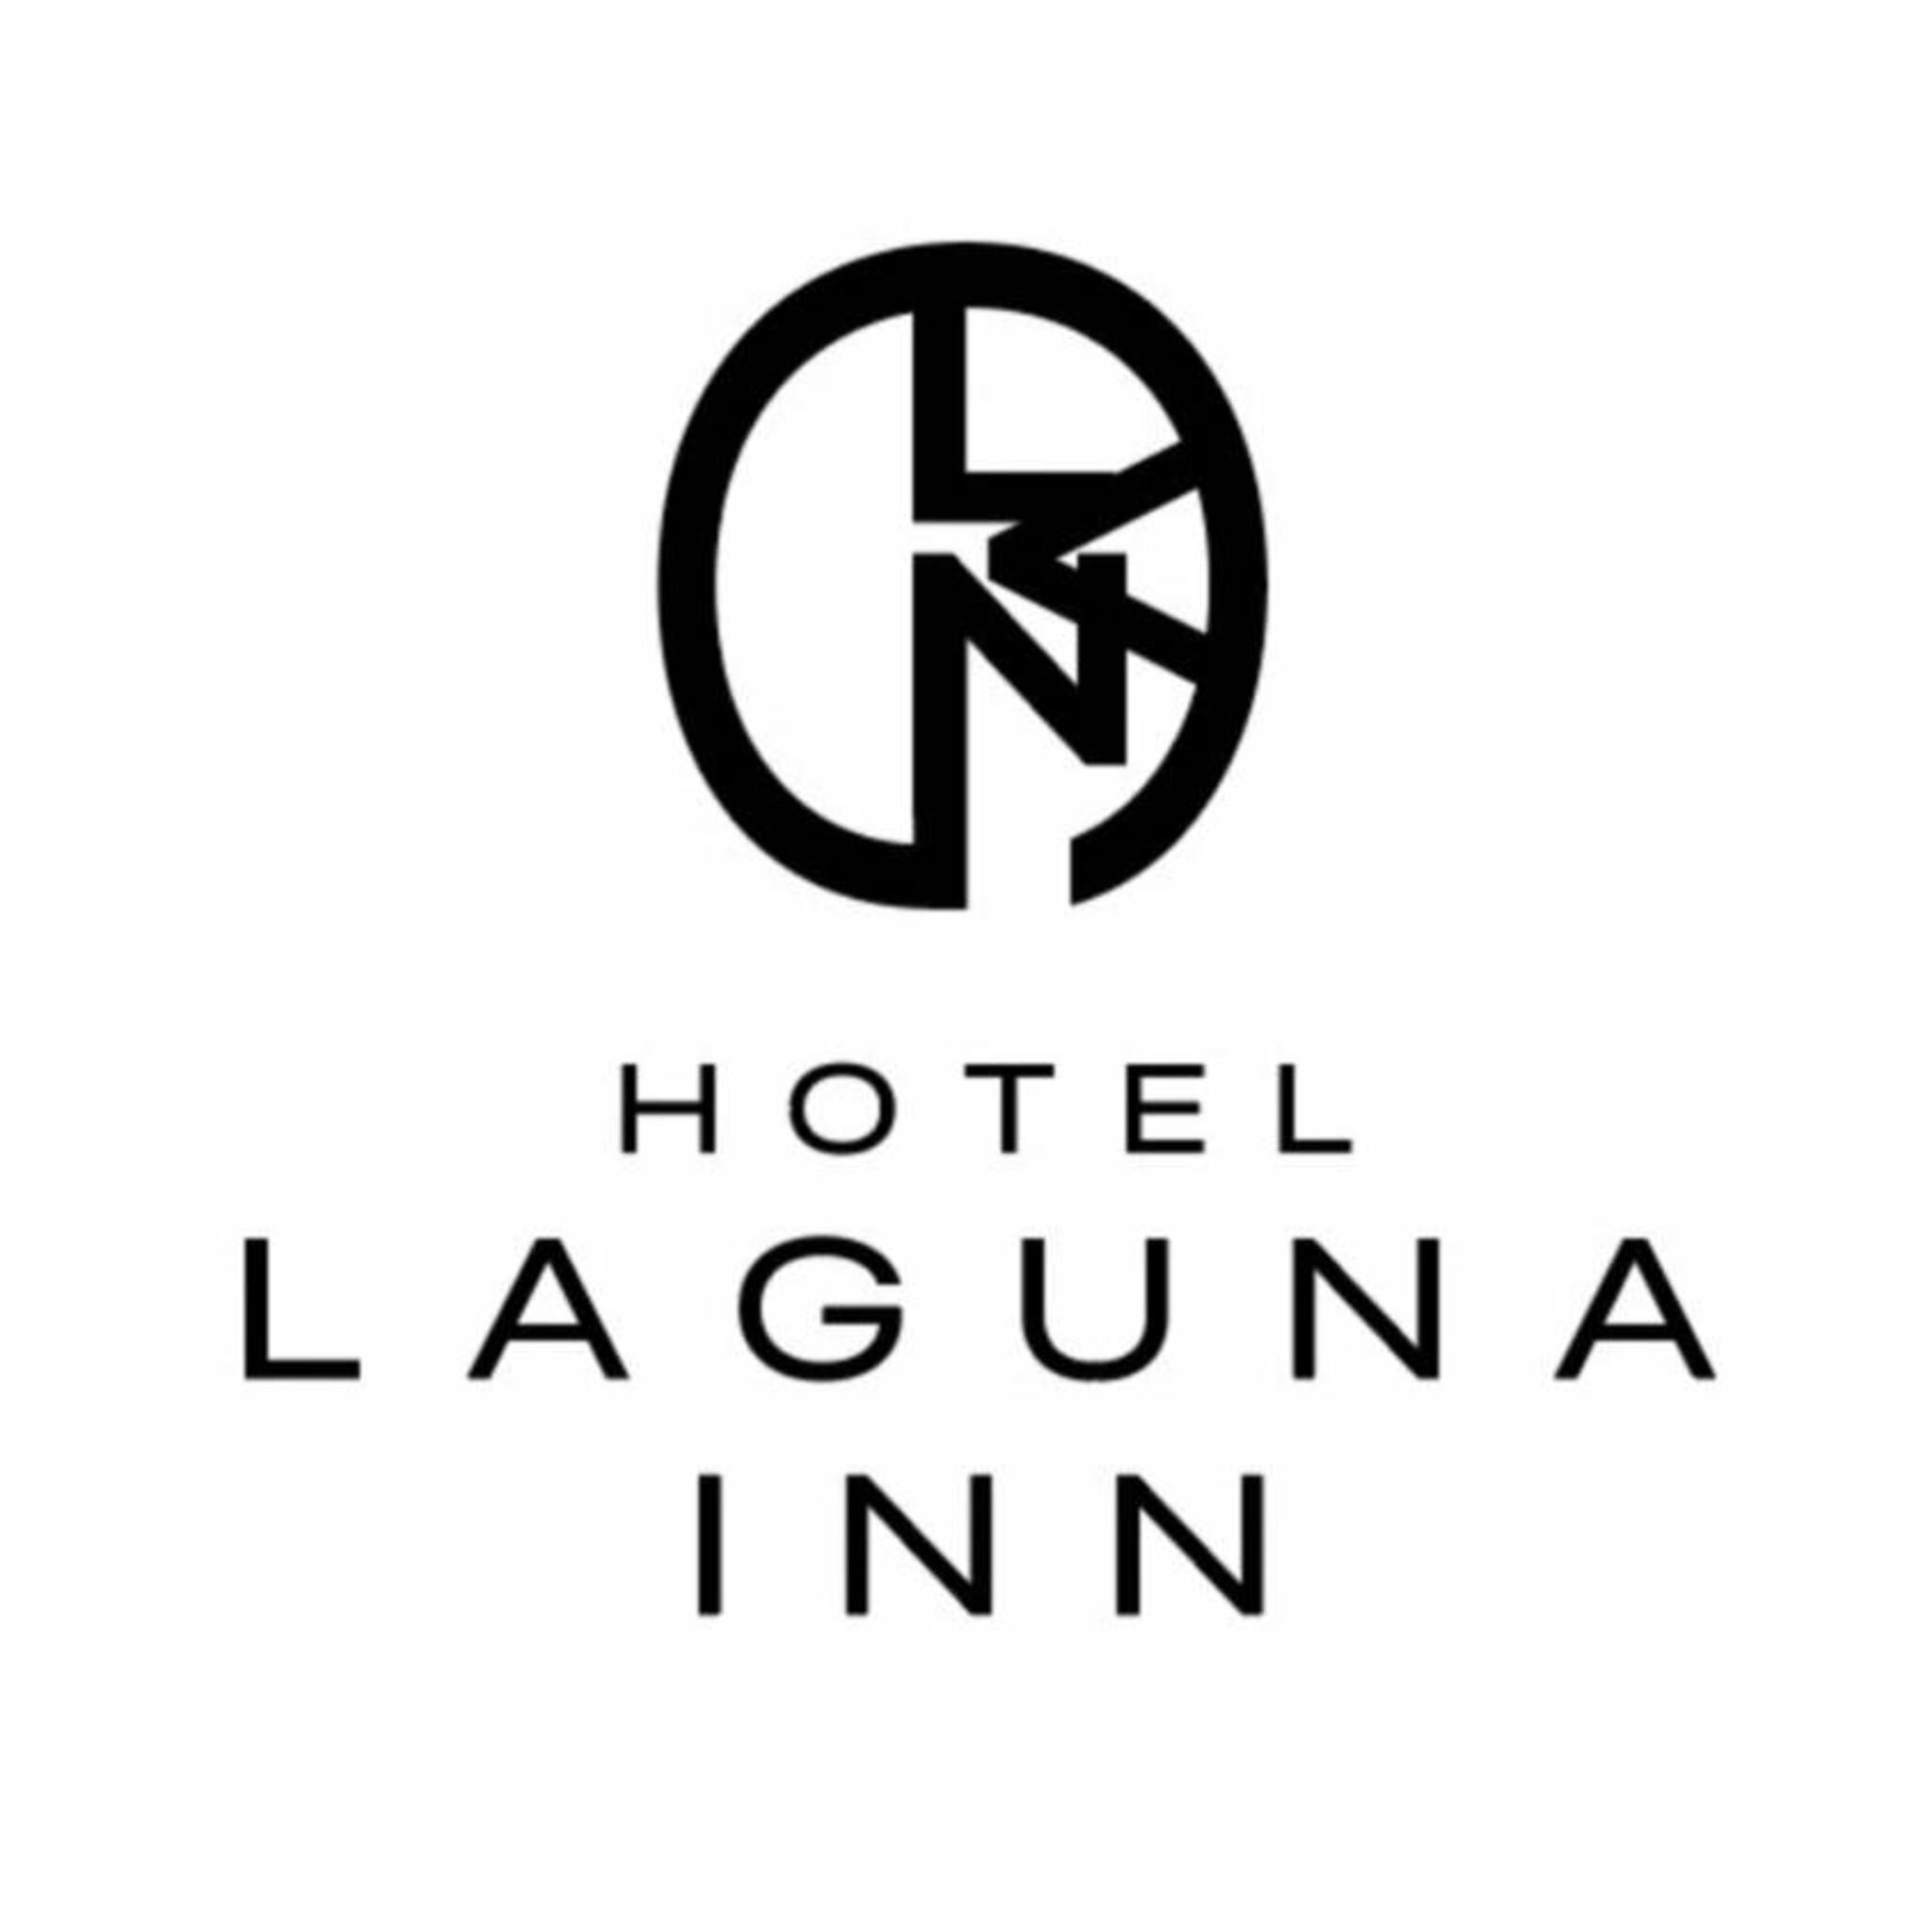 LAGUNA INN / ホテルラグナイン八王子の代表写真1